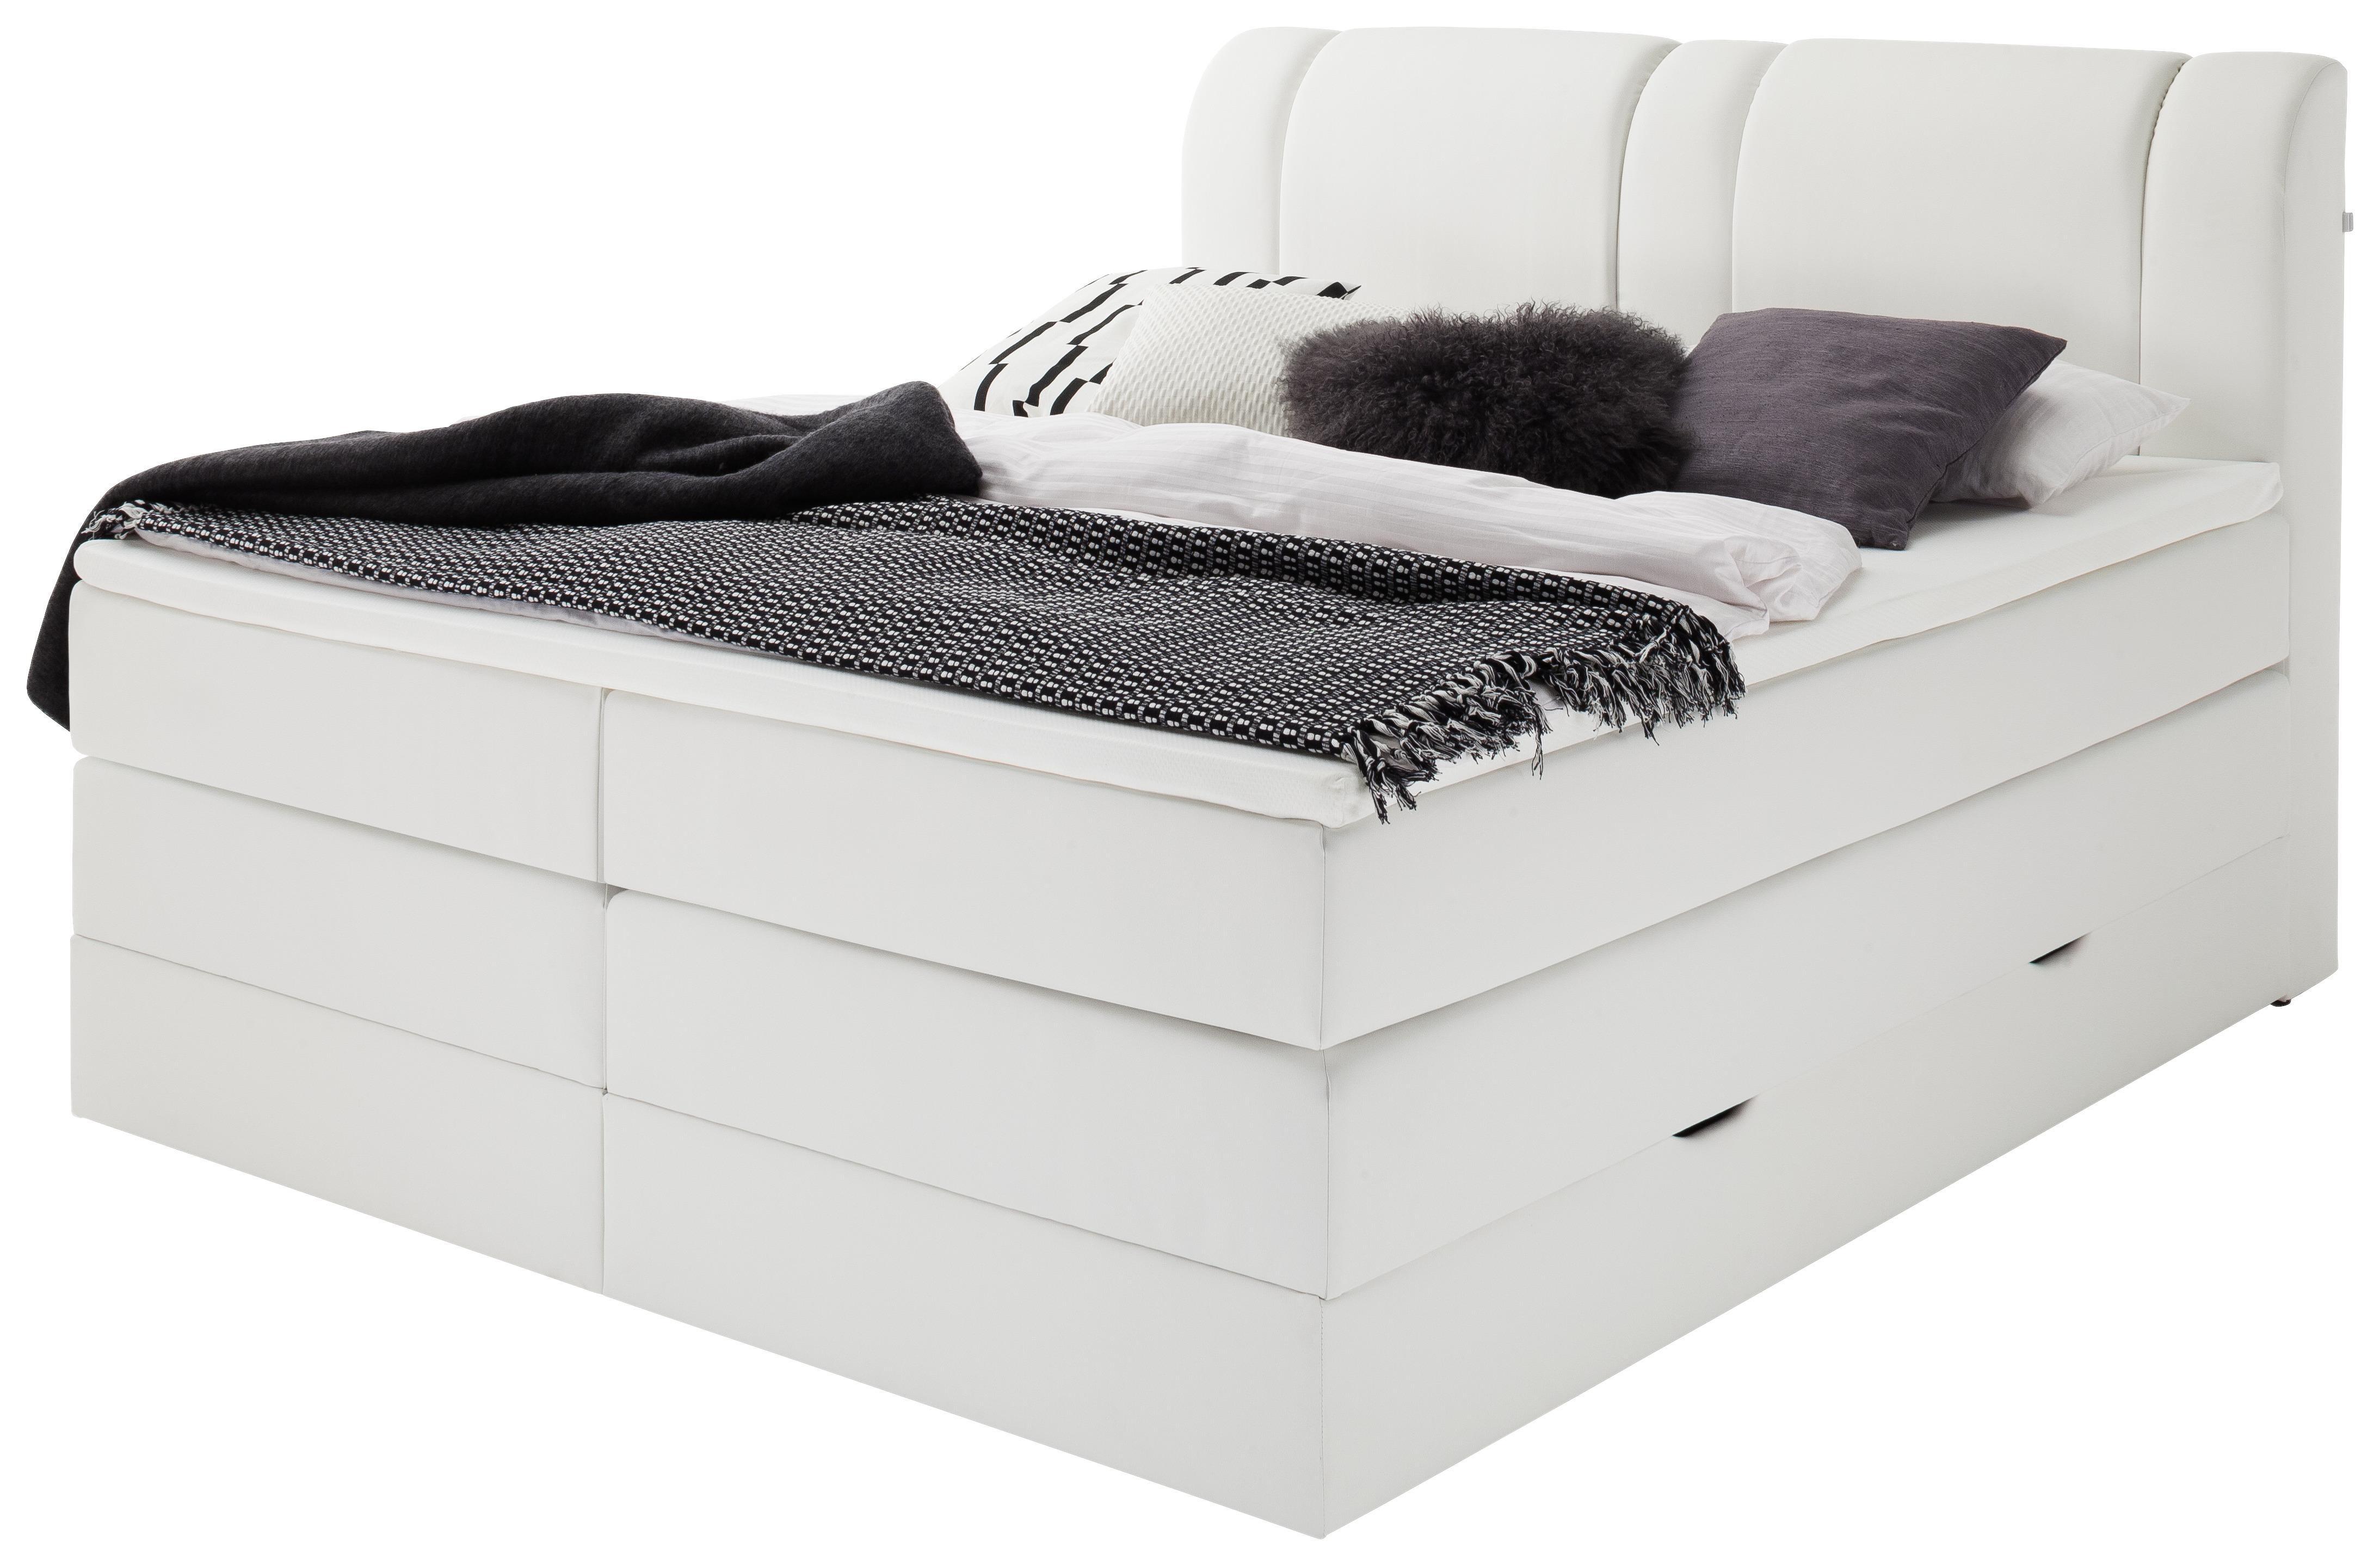 Boxspringbett in Weiß ca. 180x200cm - Weiß, KONVENTIONELL, Textil (180/200cm) - Premium Living